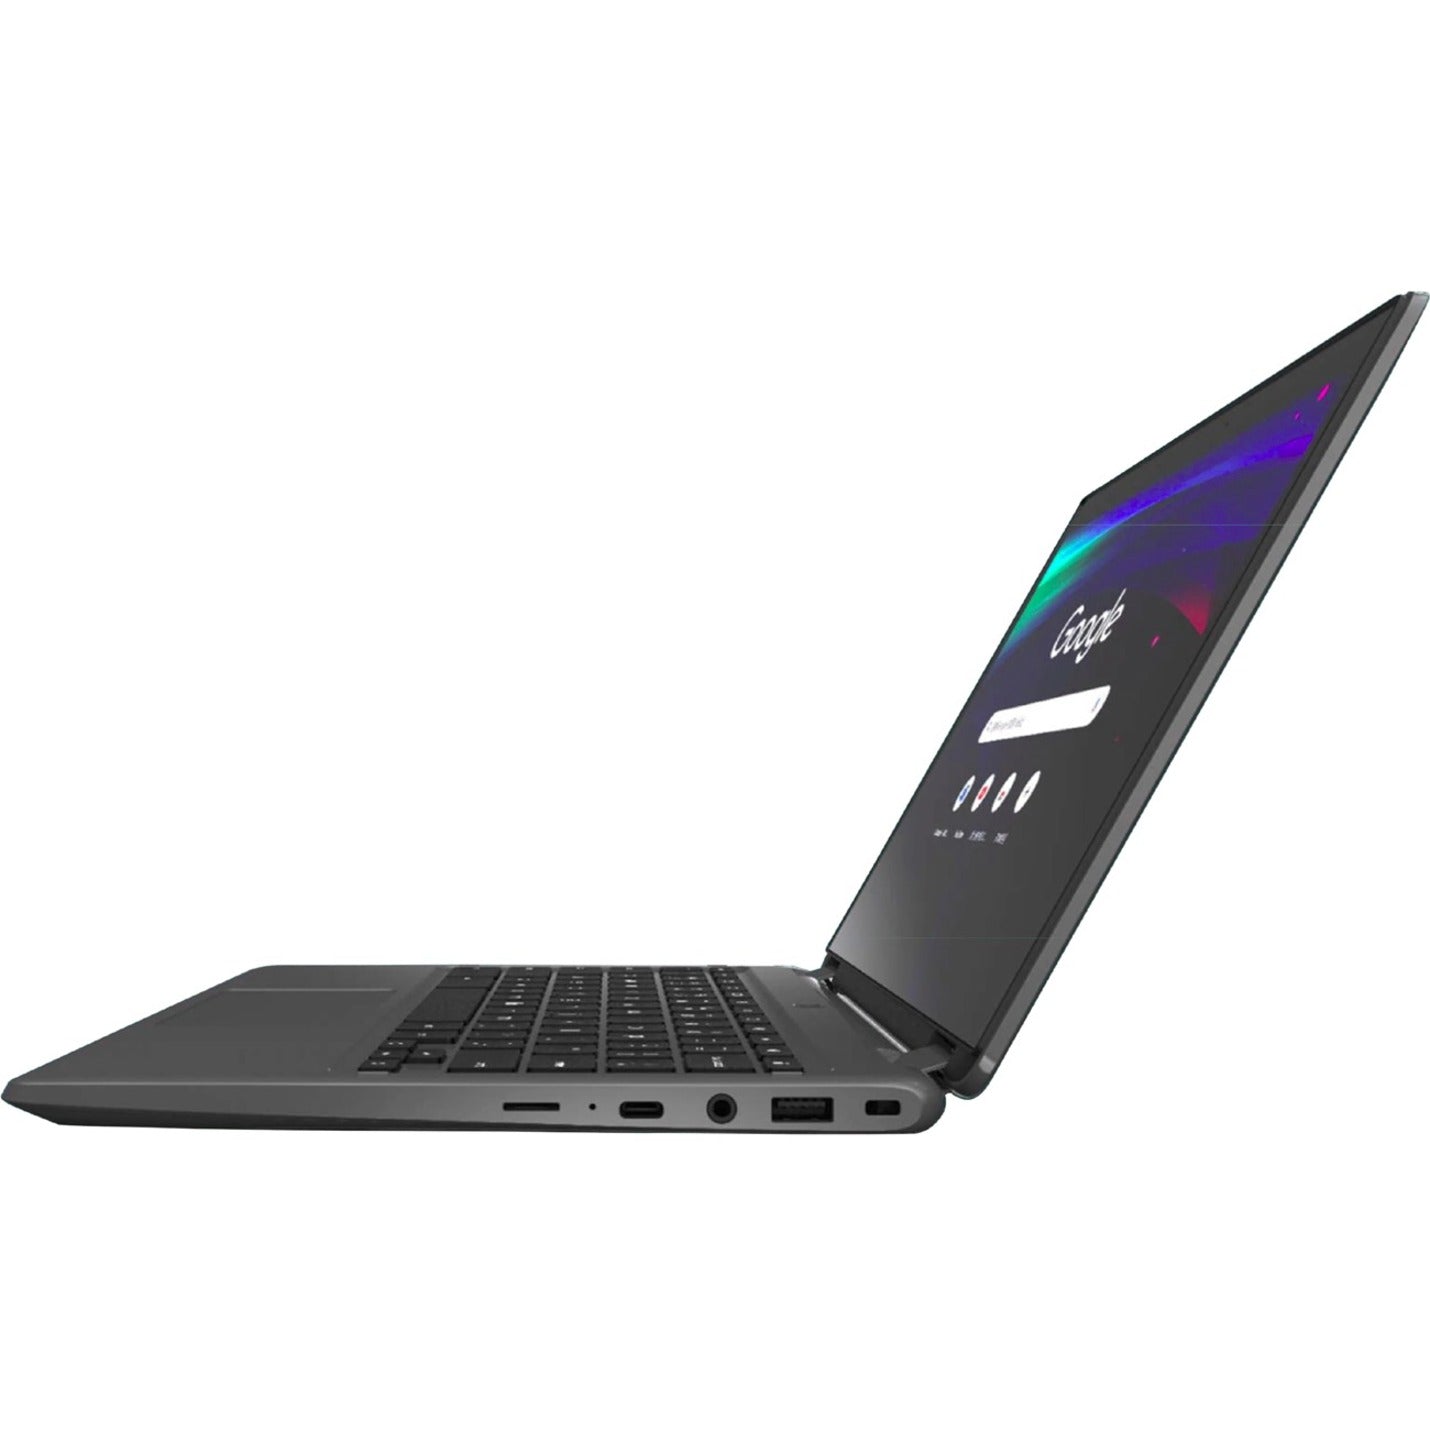 CTL CBUS1100017 Chromebook NL72T 2 in 1 Chromebook, 11.6" Touchscreen, Intel Celeron N4500, 4GB RAM, 64GB Flash Memory